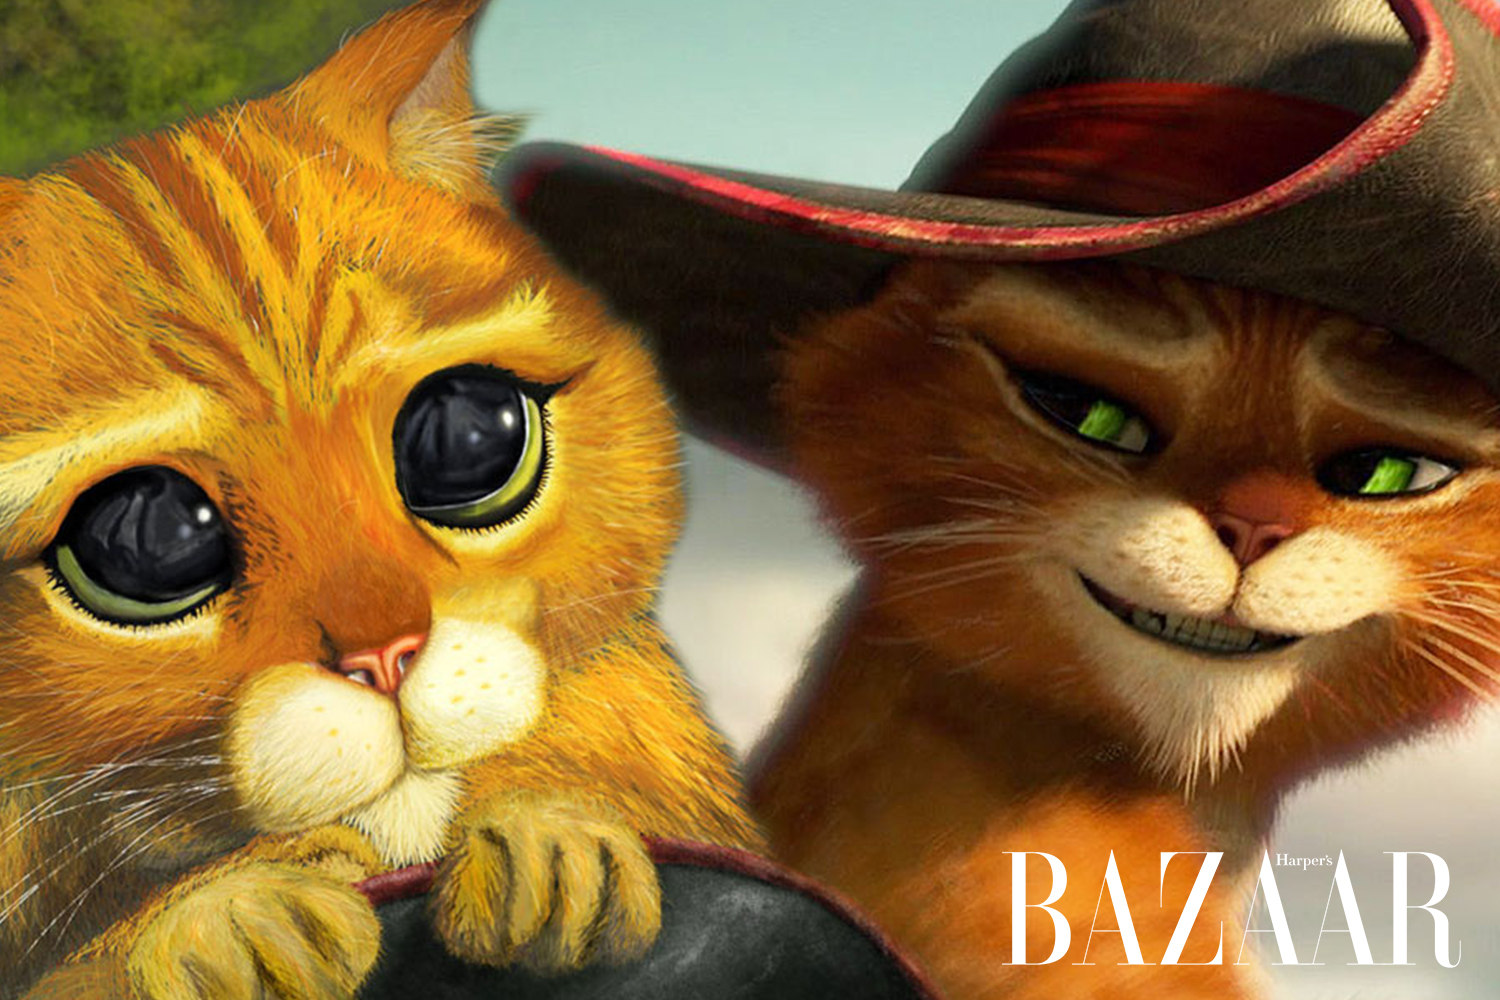 Harper's Bazaar_Top 5 phim hoạt hình về mèo nổi tiếng_02